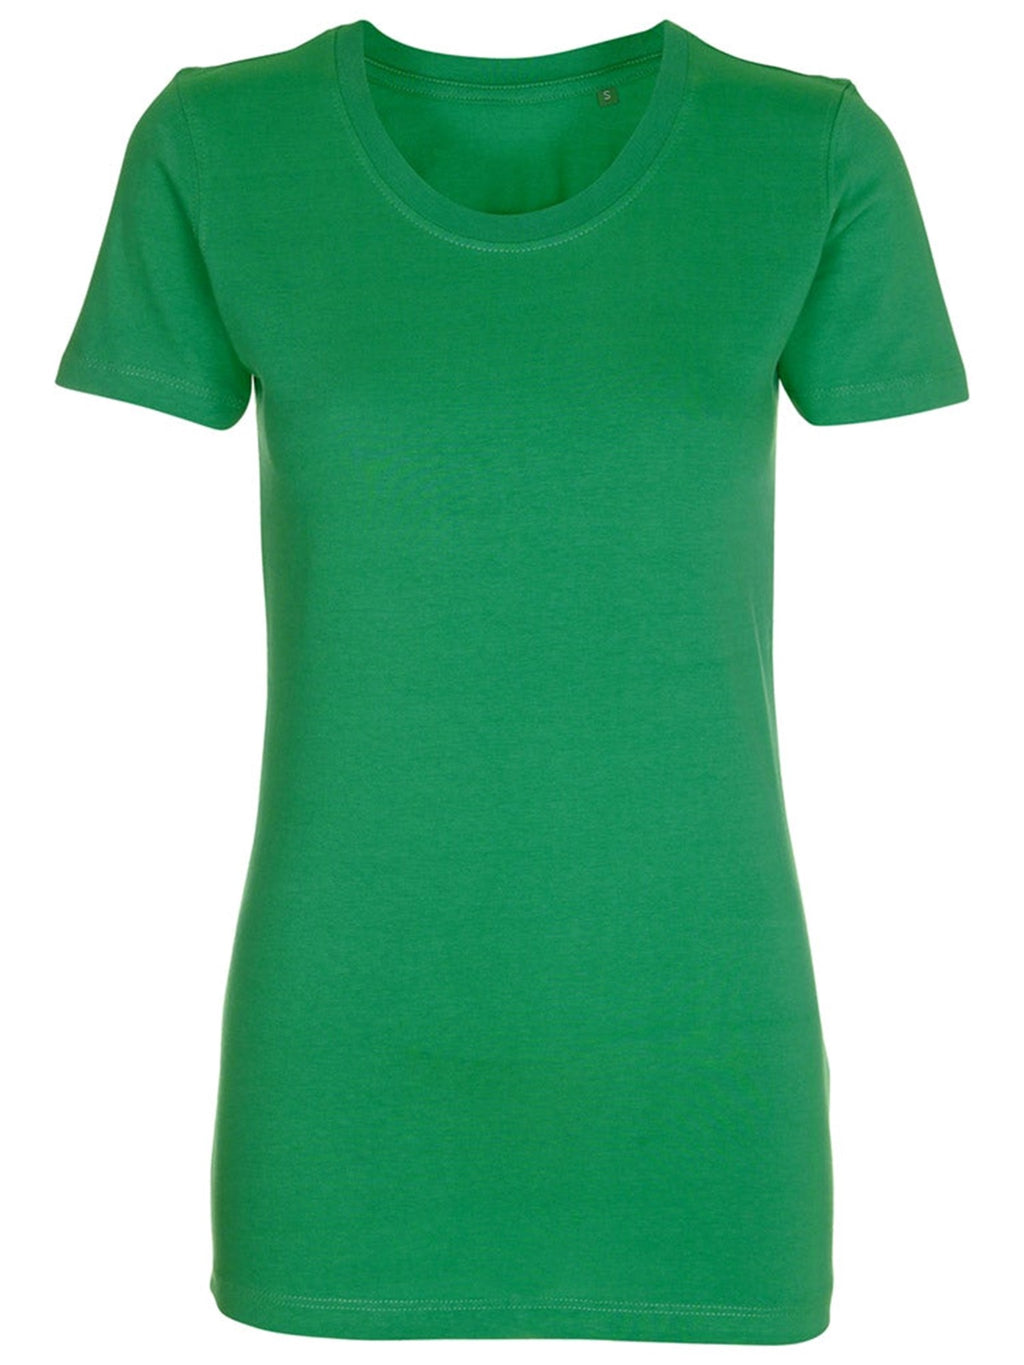 Fitted t-shirt - Grønn